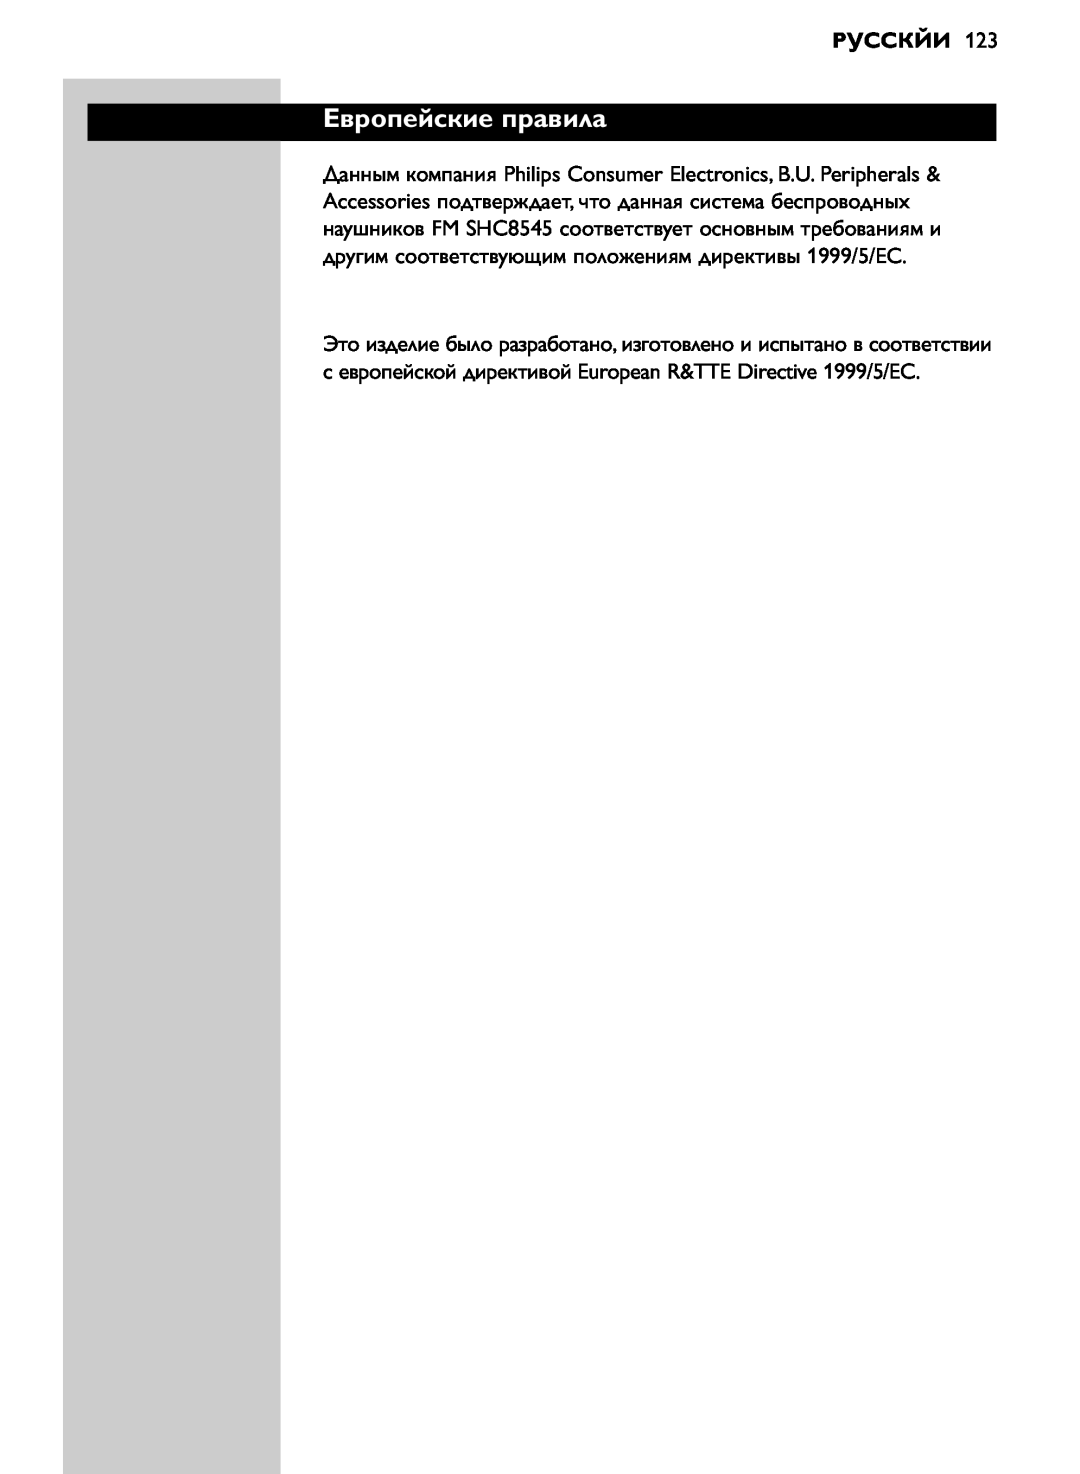 Philips SHC8545/00 manual Европейские правила, Русскйи 